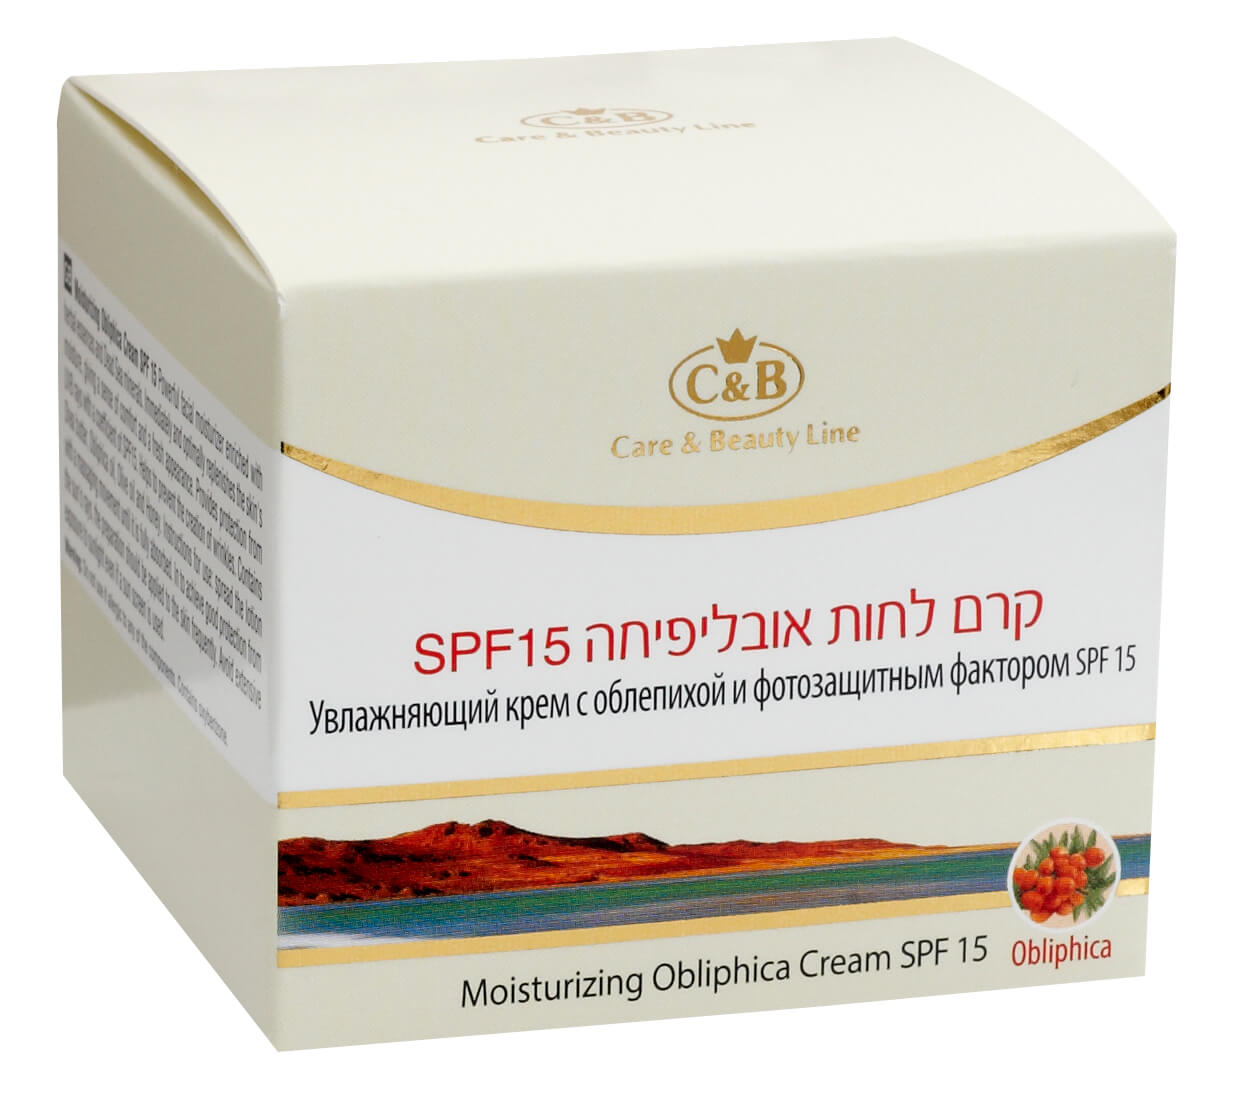 Obliphica Moisturizing Cream with SPF 15